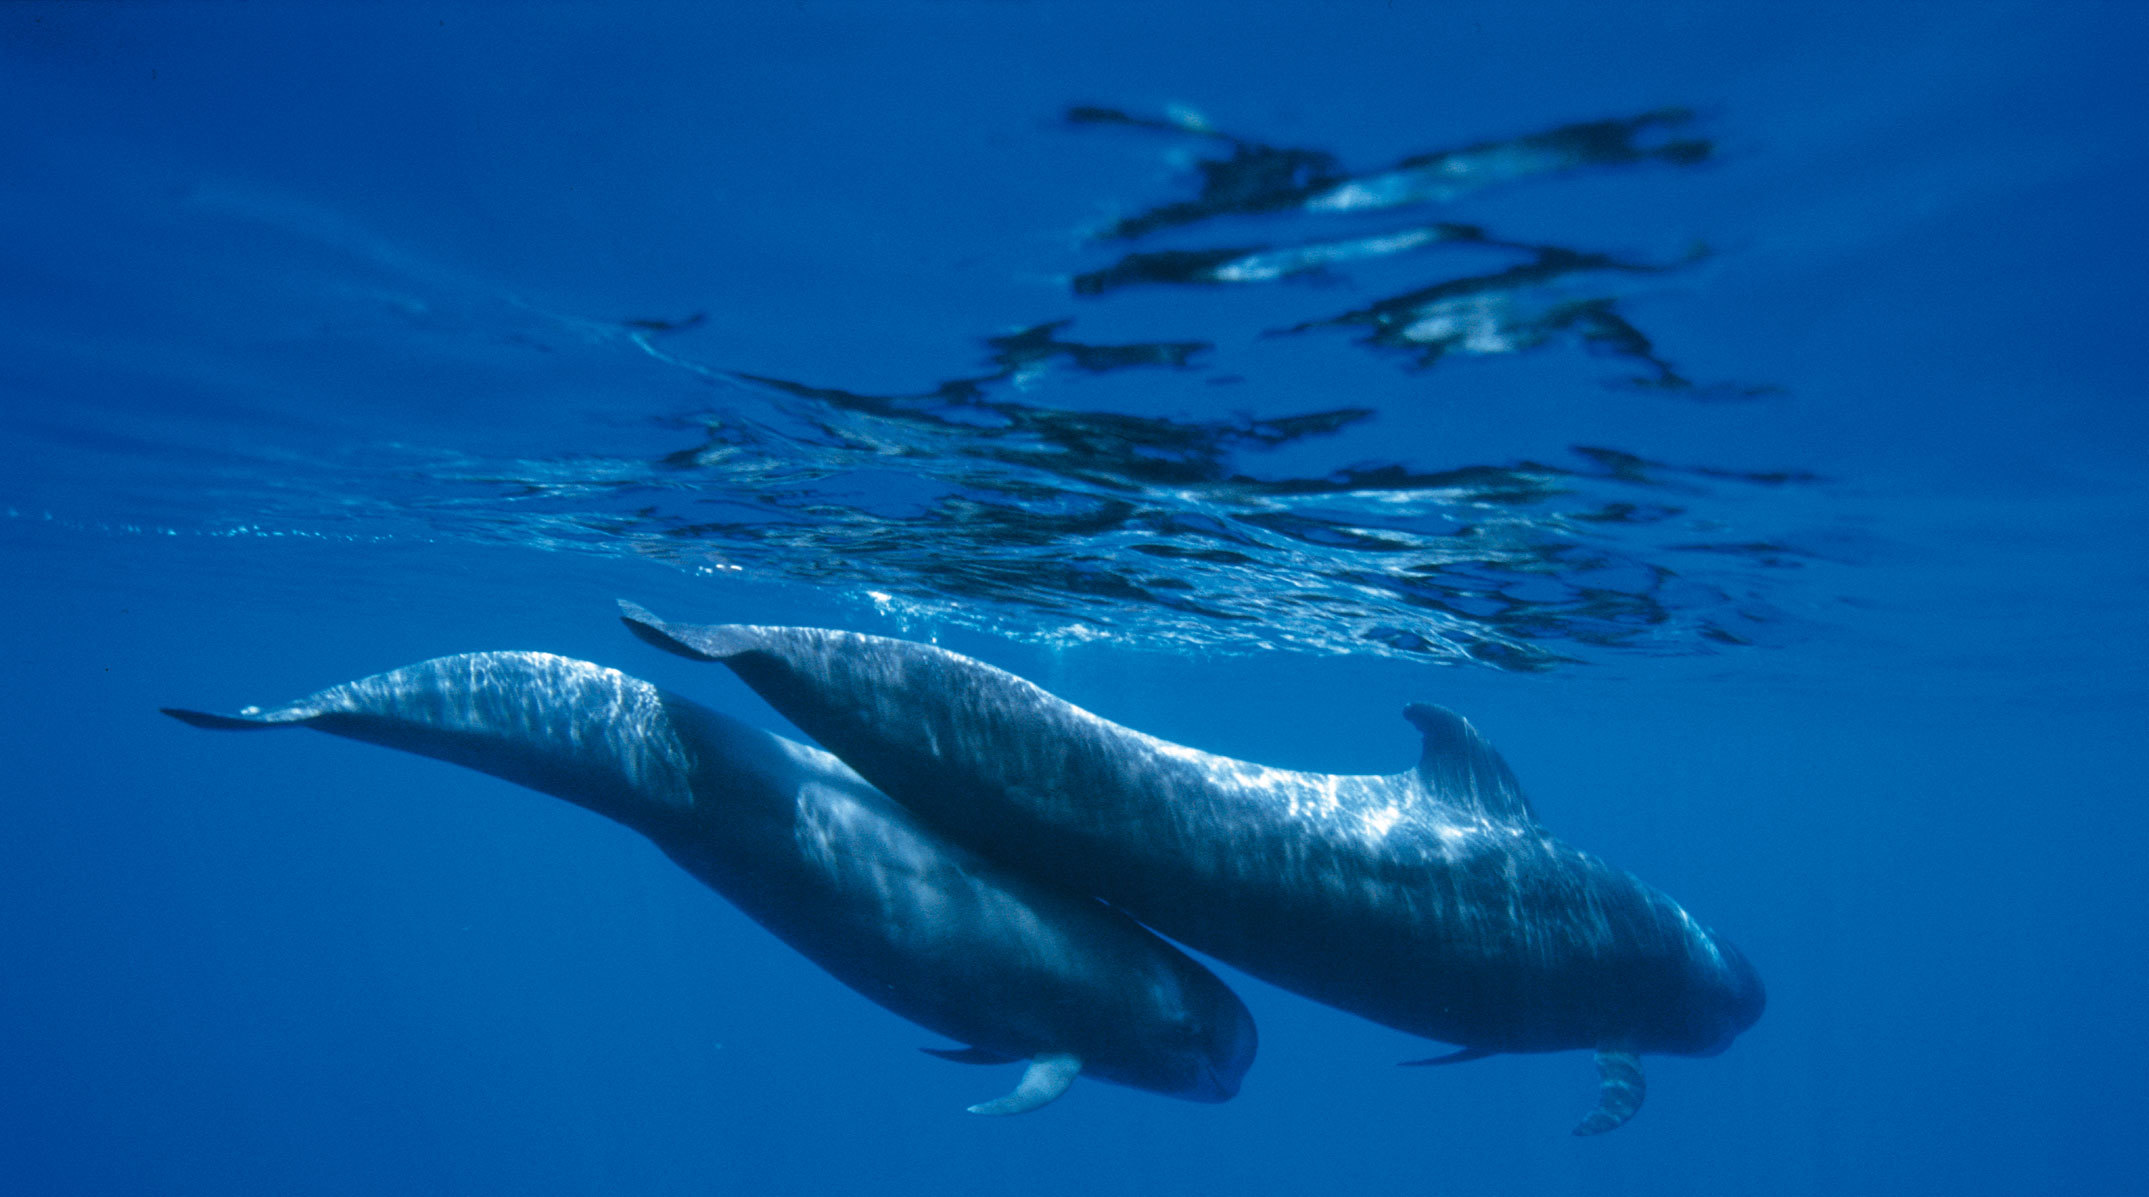 Royal Delfin Tenerife , HD Wallpaper & Backgrounds